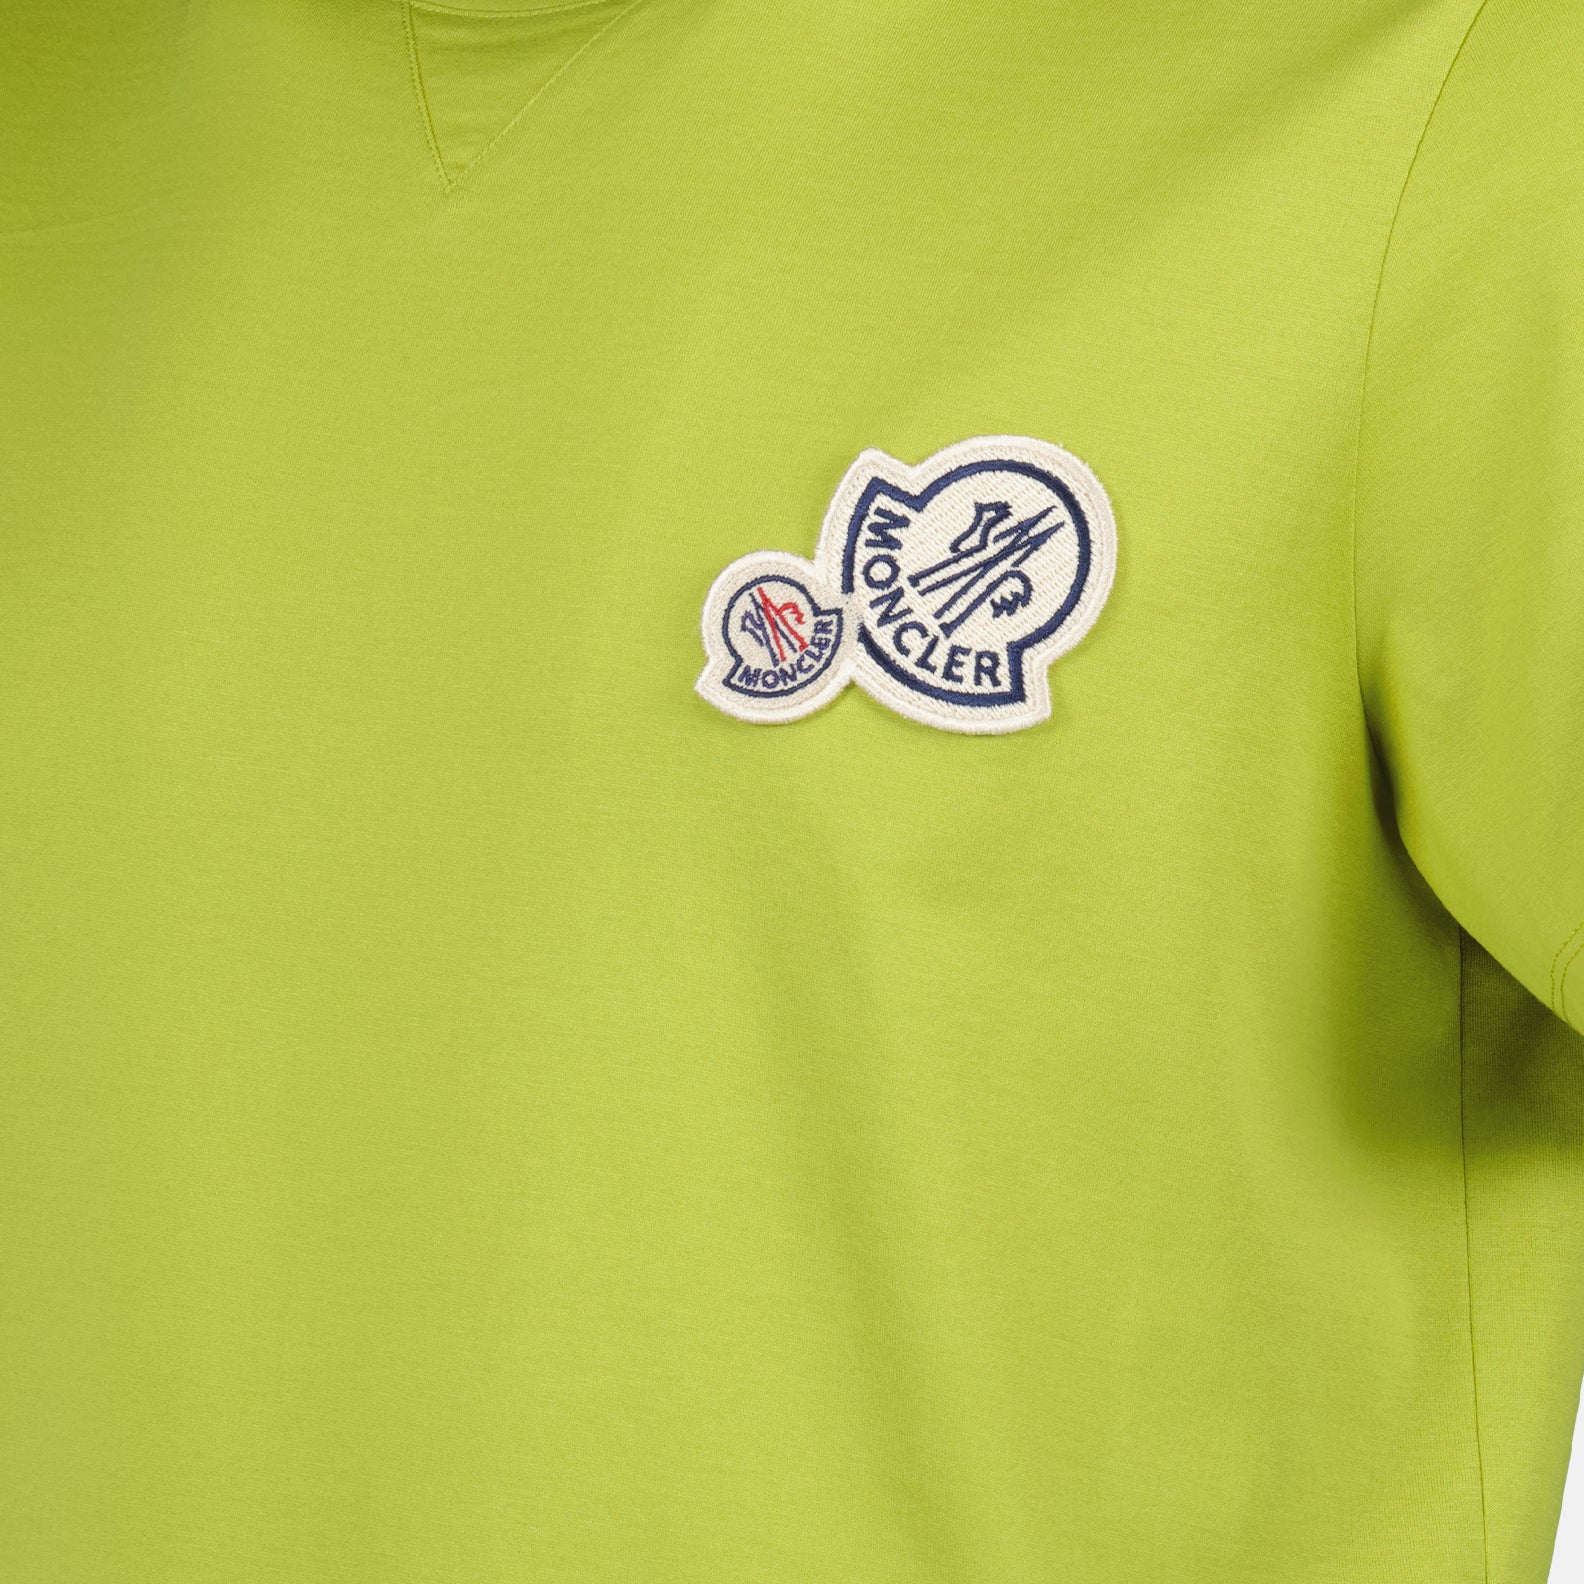 T-shirt Moncler Double Logo T-Shirt 8C000588390Y 001